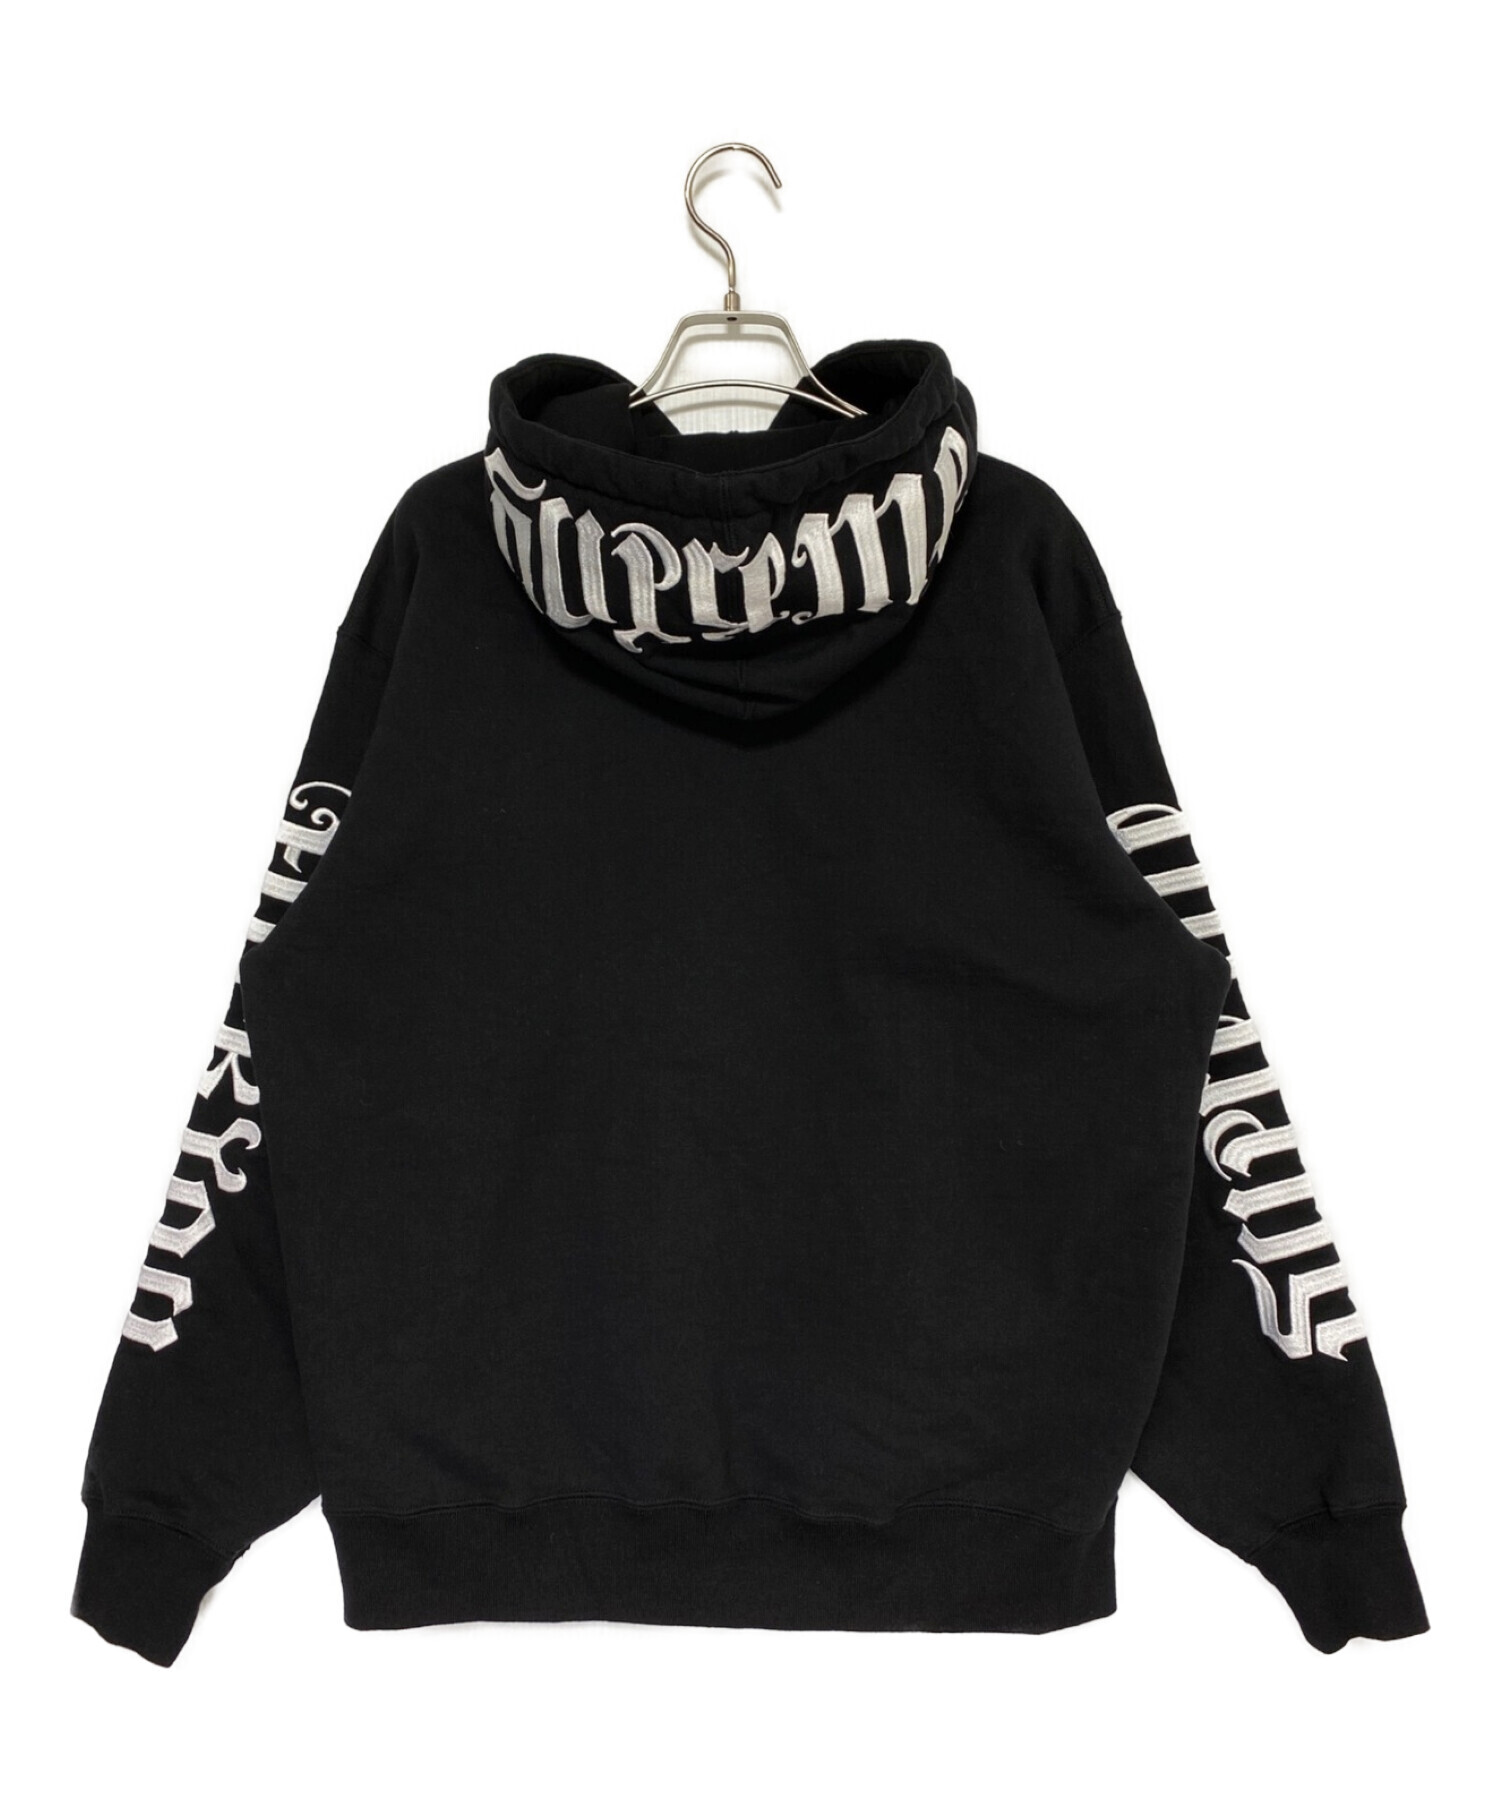 MサイズSupreme Ambigram Hooded Sweatshirt Black